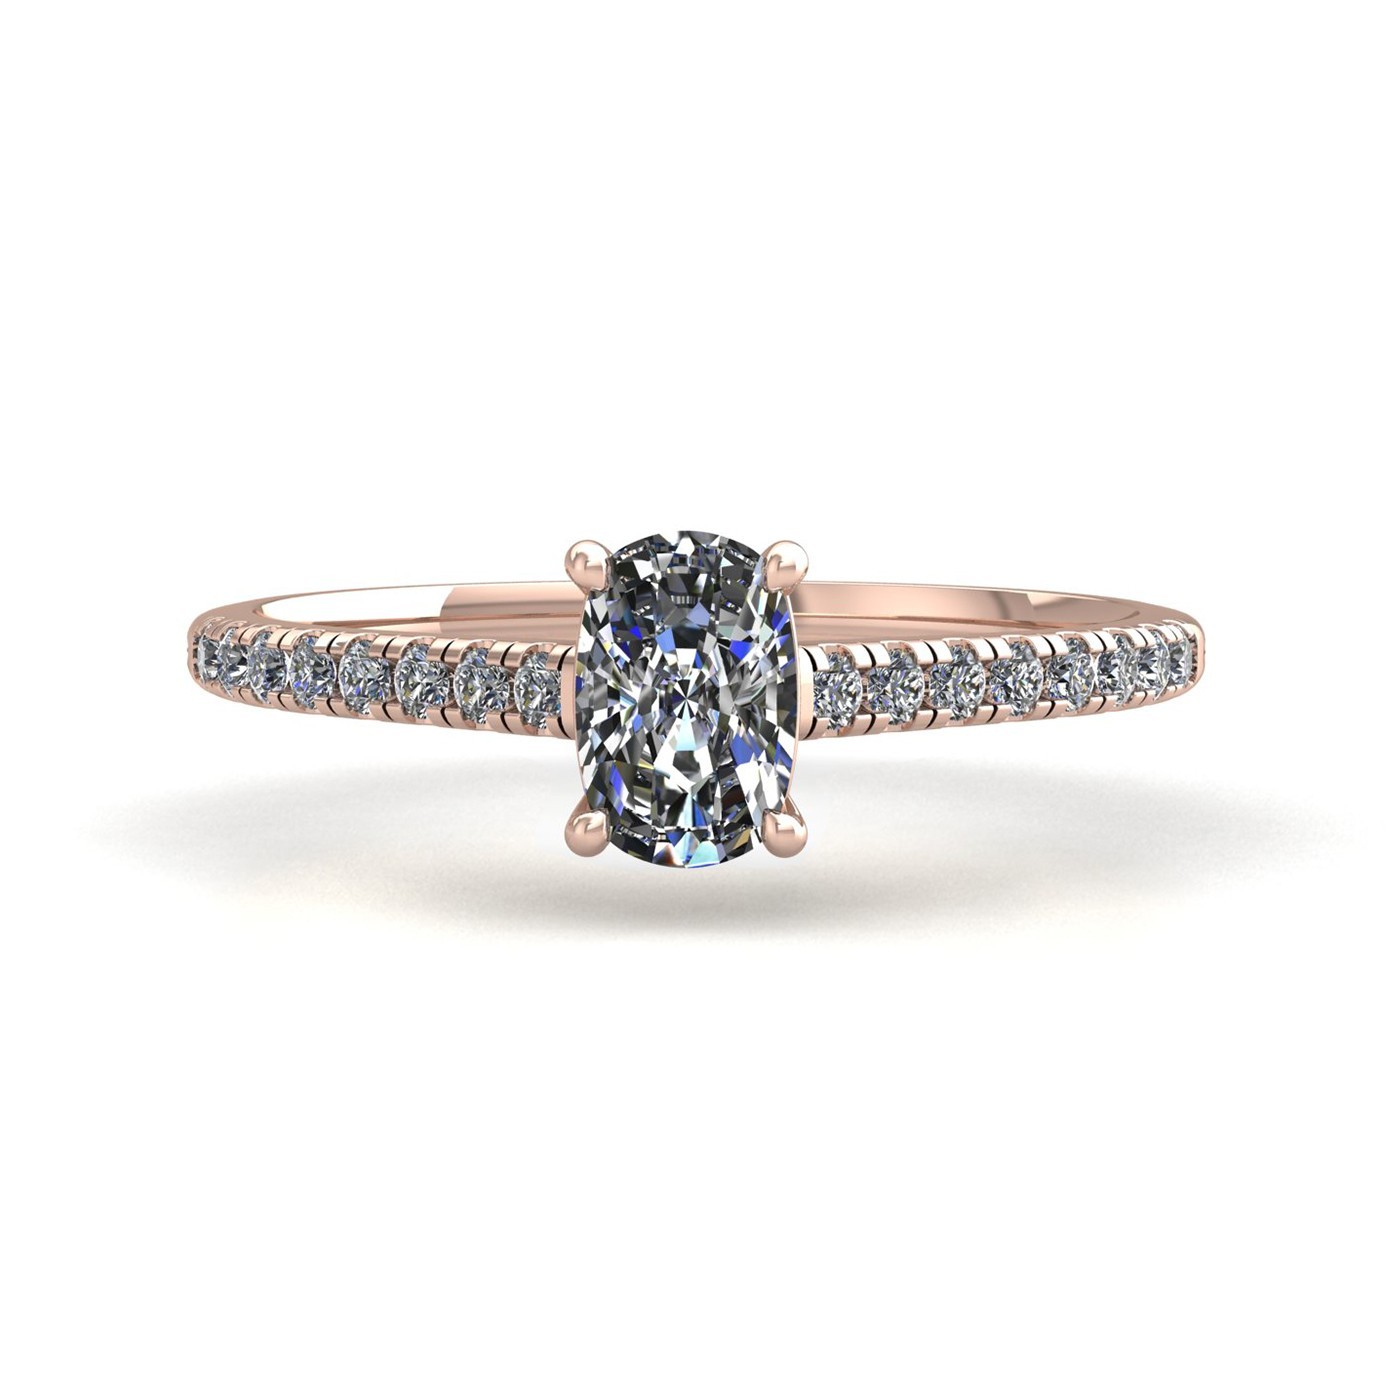 18k rose gold  4 prongs elongated cushion cut diamond engagement ring with whisper thin pavÉ set band Photos & images